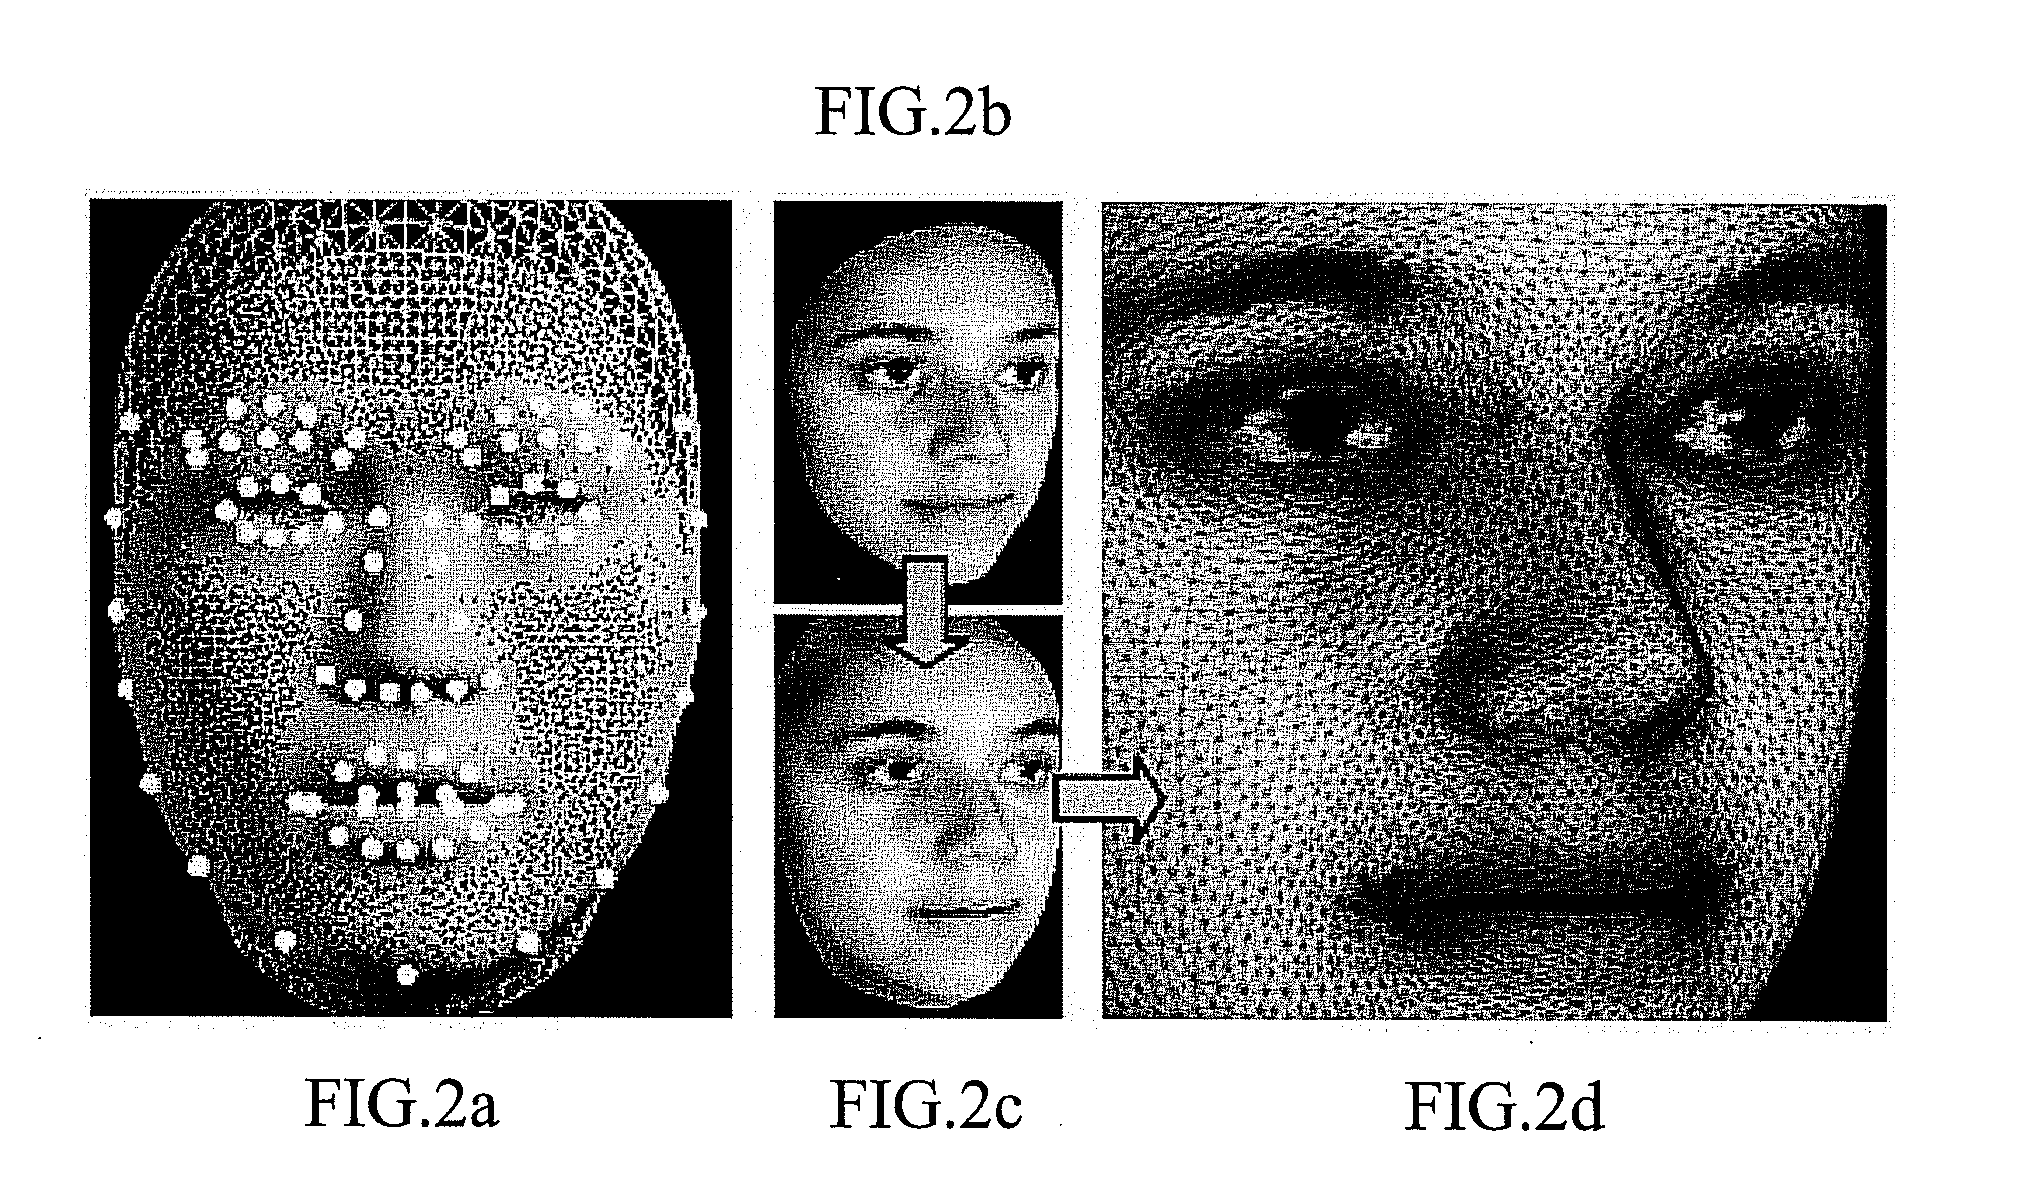 3D face model construction method